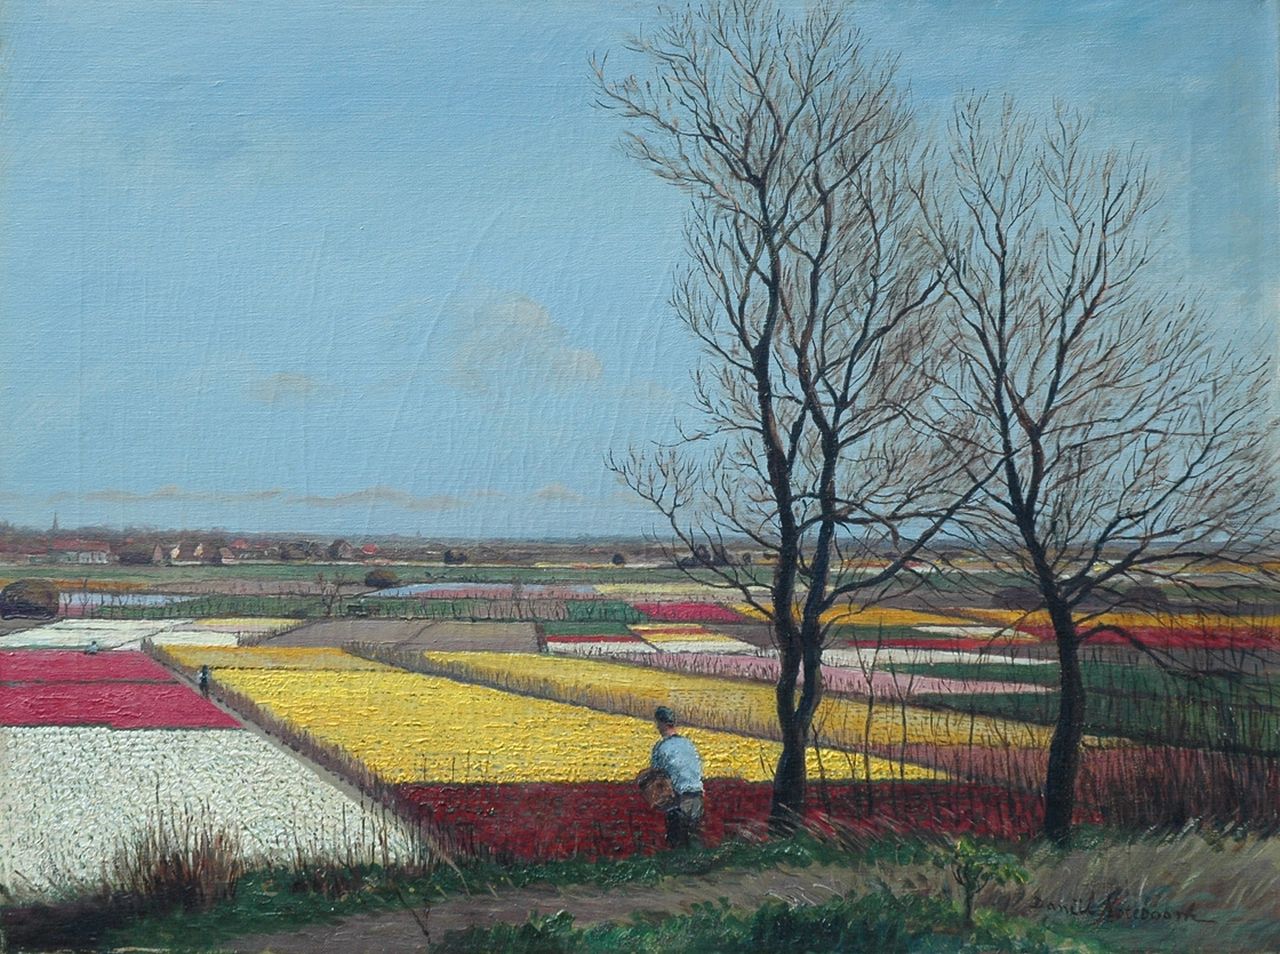 Noteboom D.  | Daniël Noteboom, Tulip fields near Noordwijk, oil on canvas 45.9 x 60.8 cm, signed l.r.